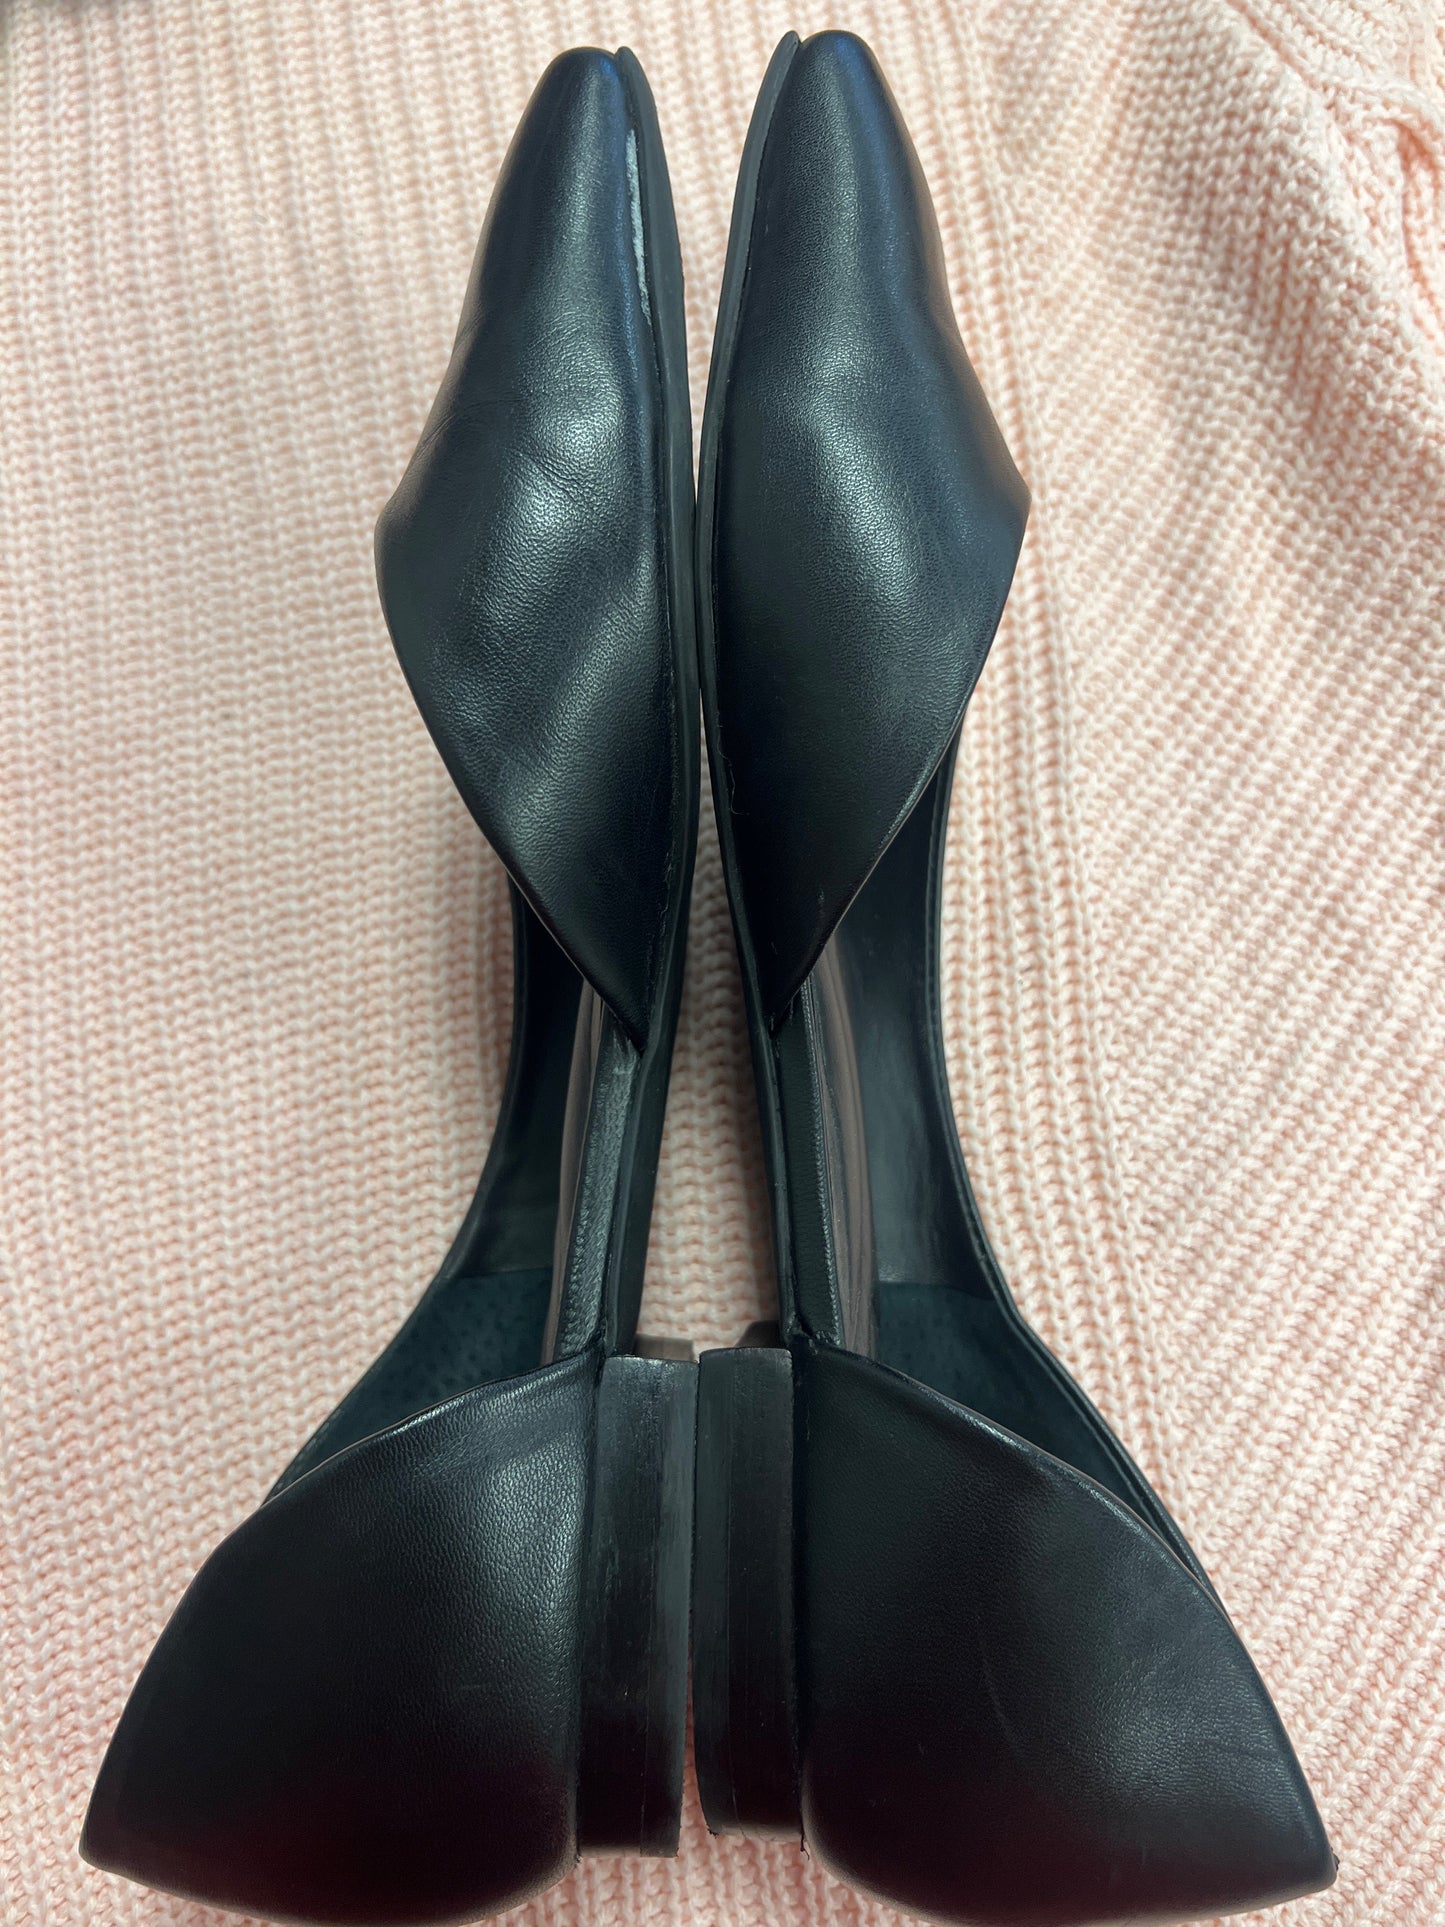 Shoes Flats Ballet By Antonio Melani  Size: 8.5